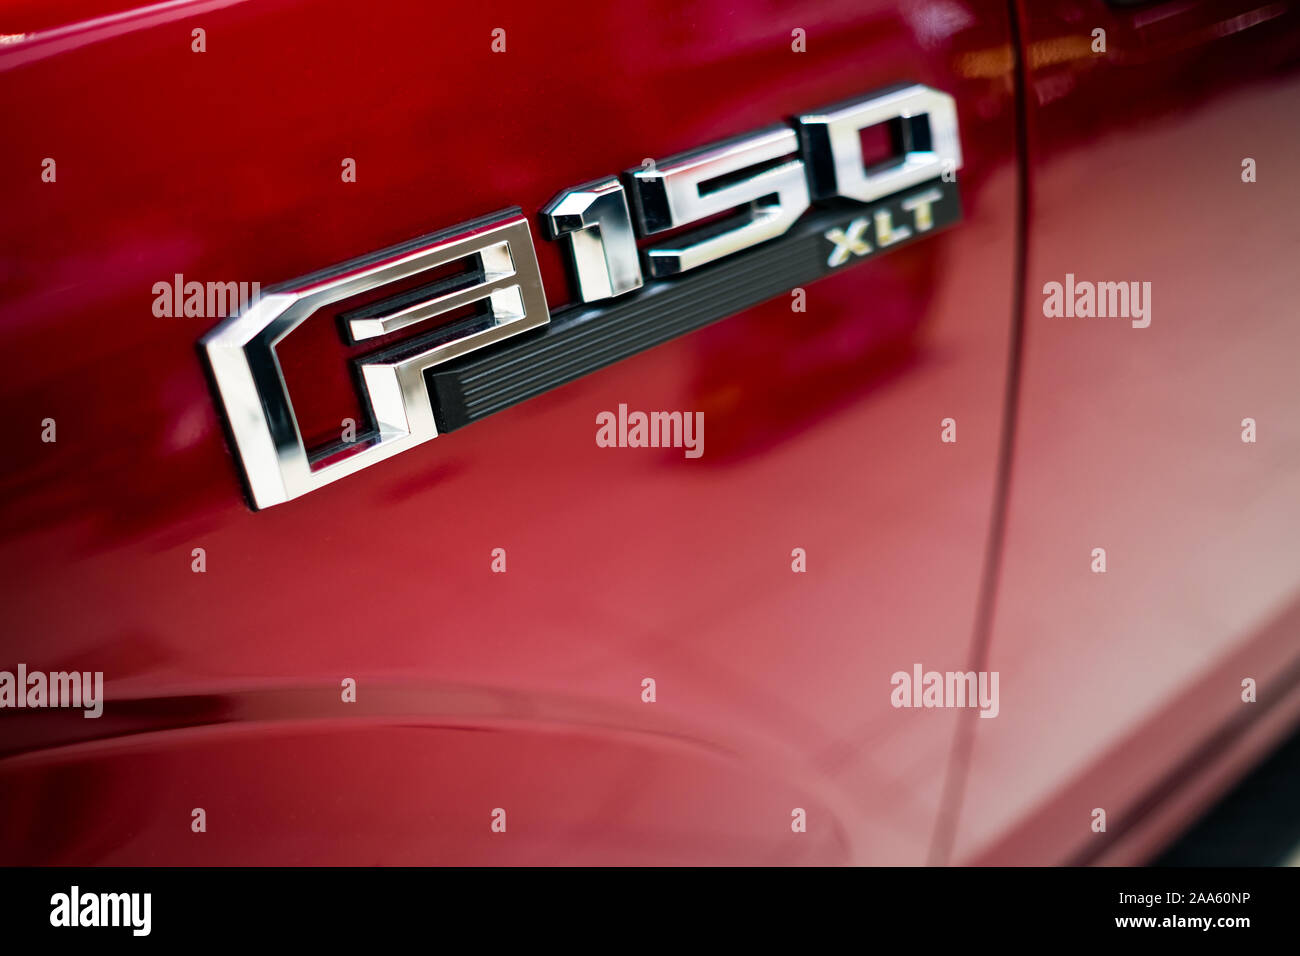 Ford F150 pickup truck logo Stock Photo